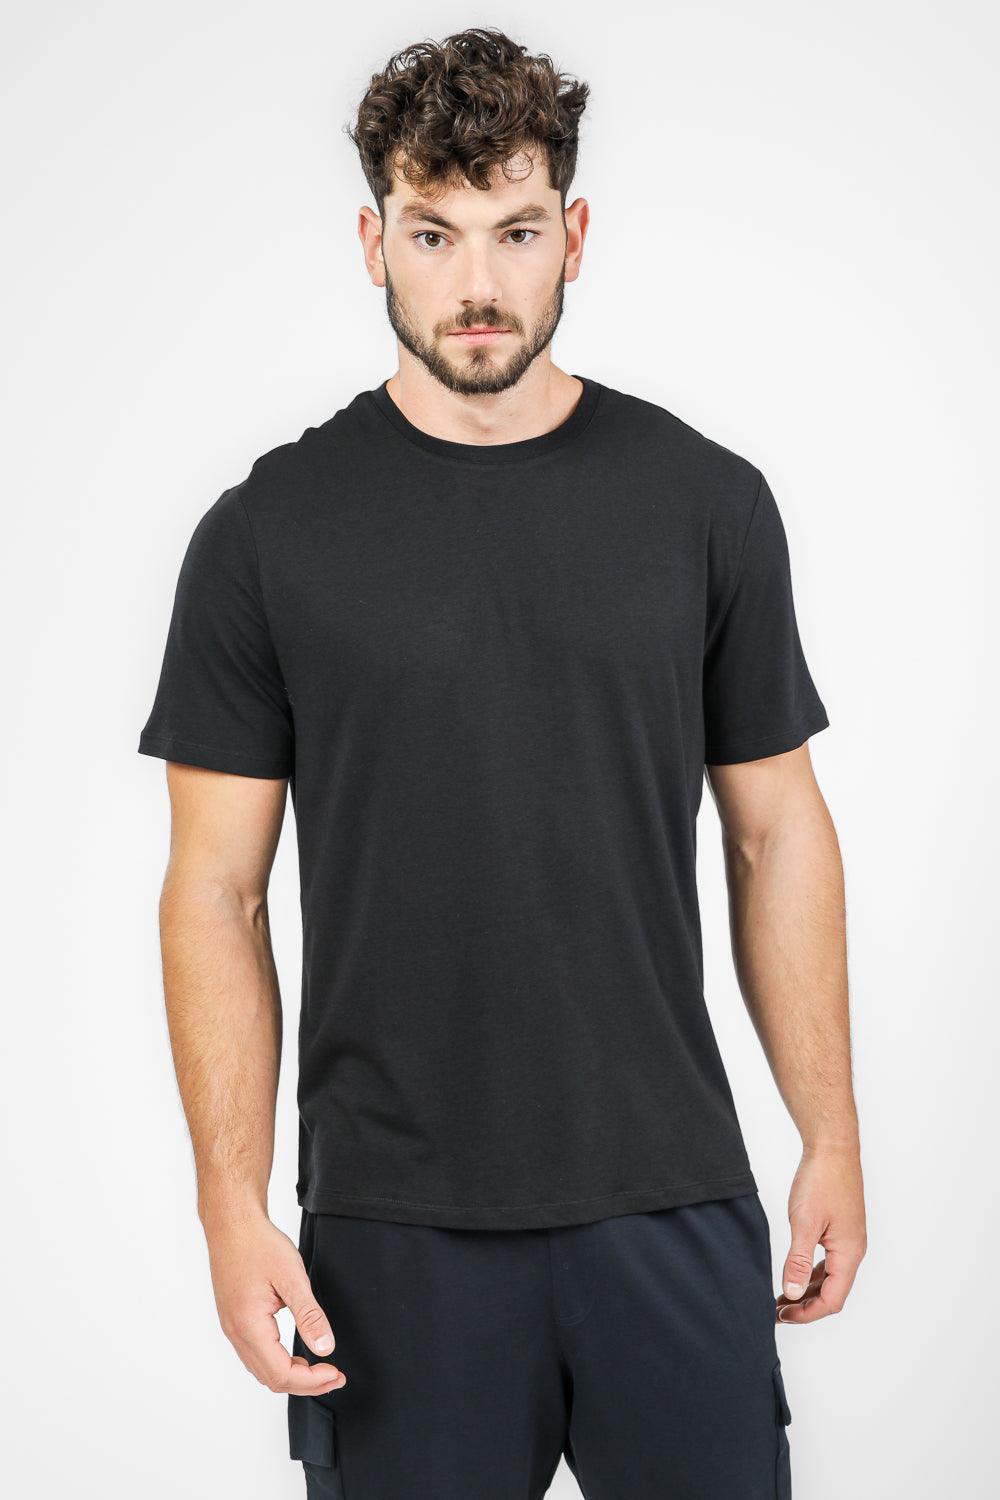 DELTA - טישירט קצרה צווארון עגול לגבר בצבע שחור - MASHBIR//365